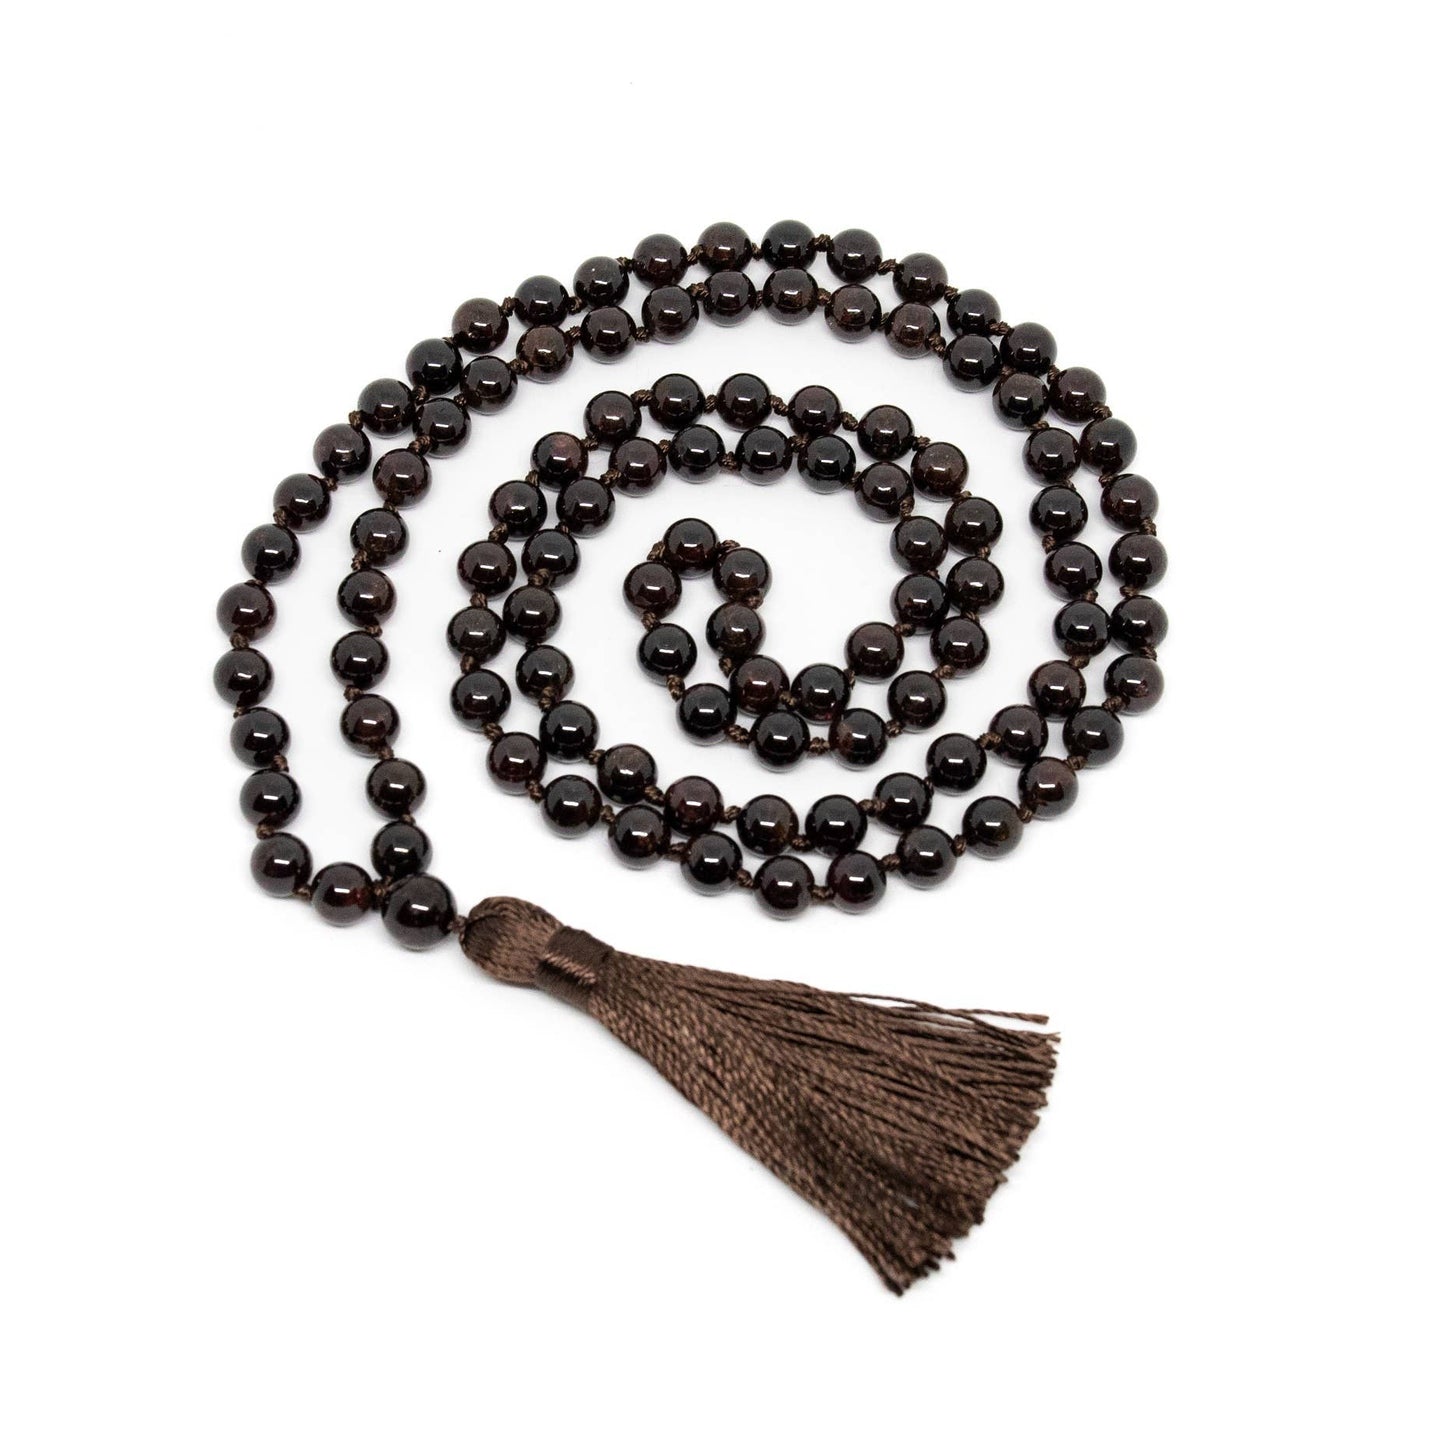 Garnet Knotted 108 Bead Buddhist Mala - Prayer Beads - 8mm (1 Pack)